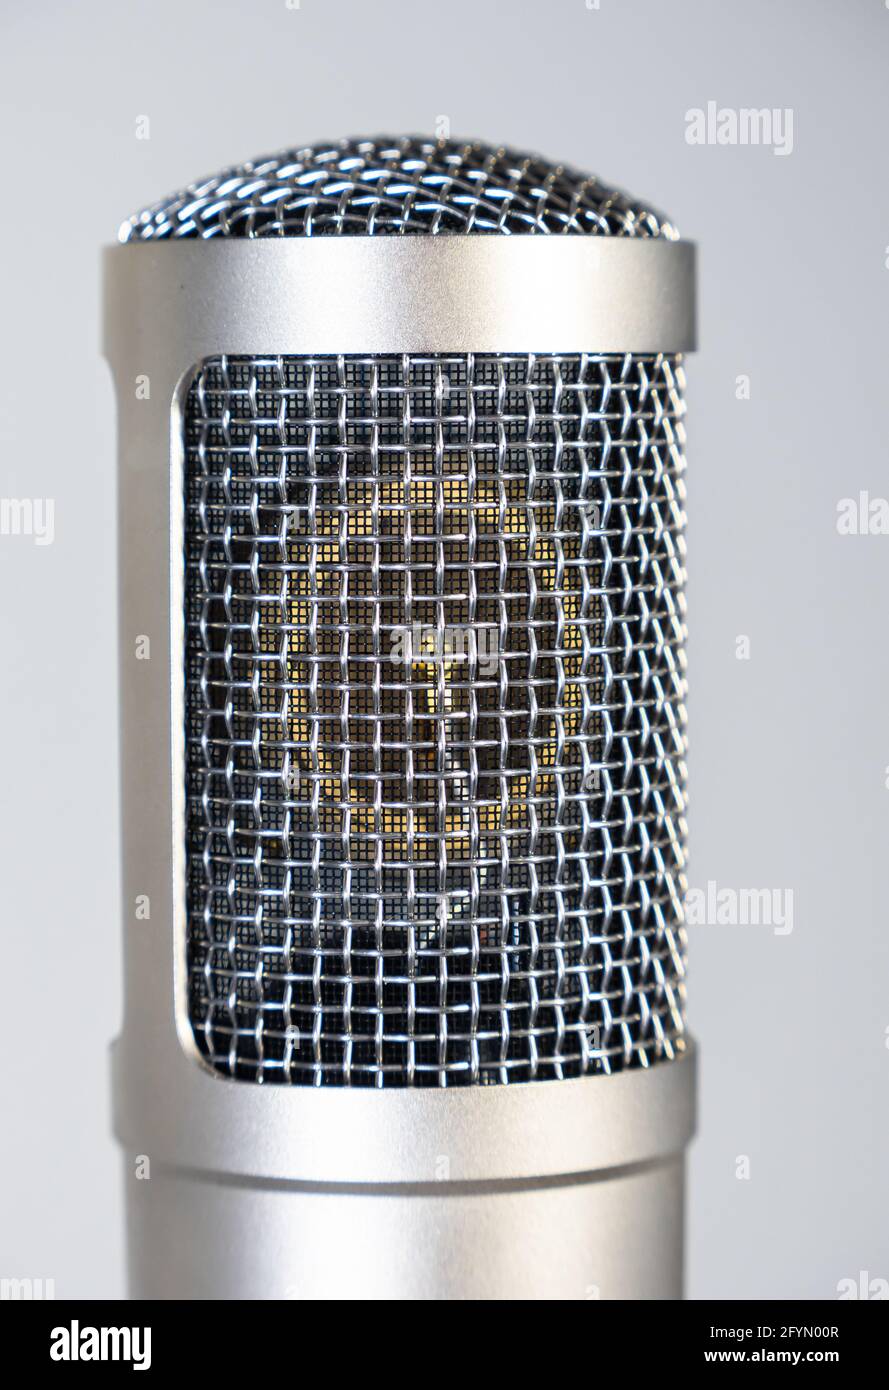 Zurich, Switzerland - November 30, 2020: Professional studio large membrane condenser microphone Stock Photo